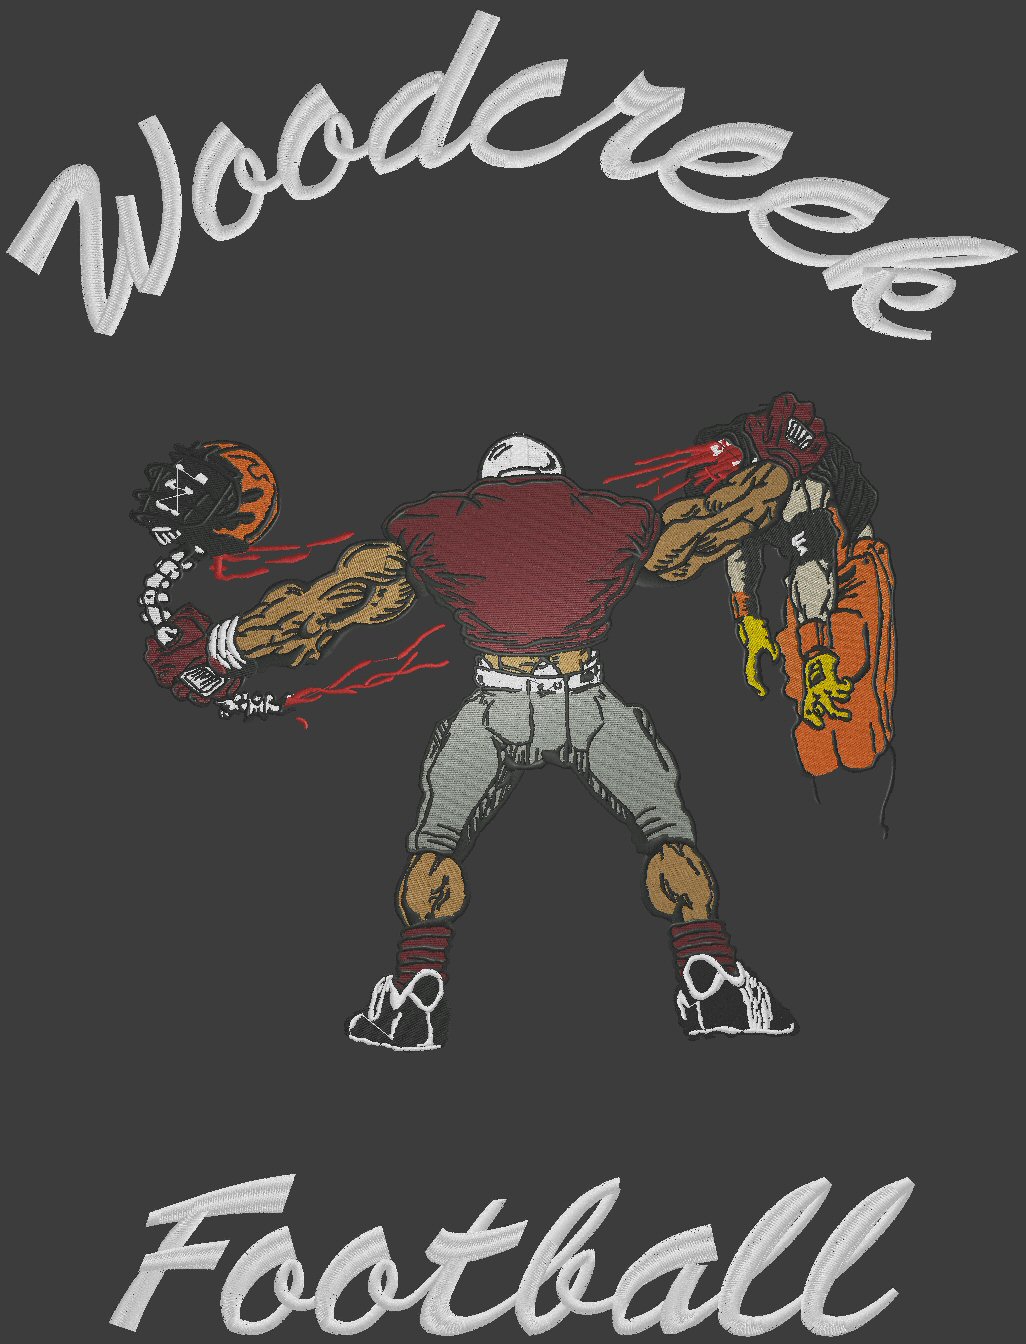 Woodcreek 9